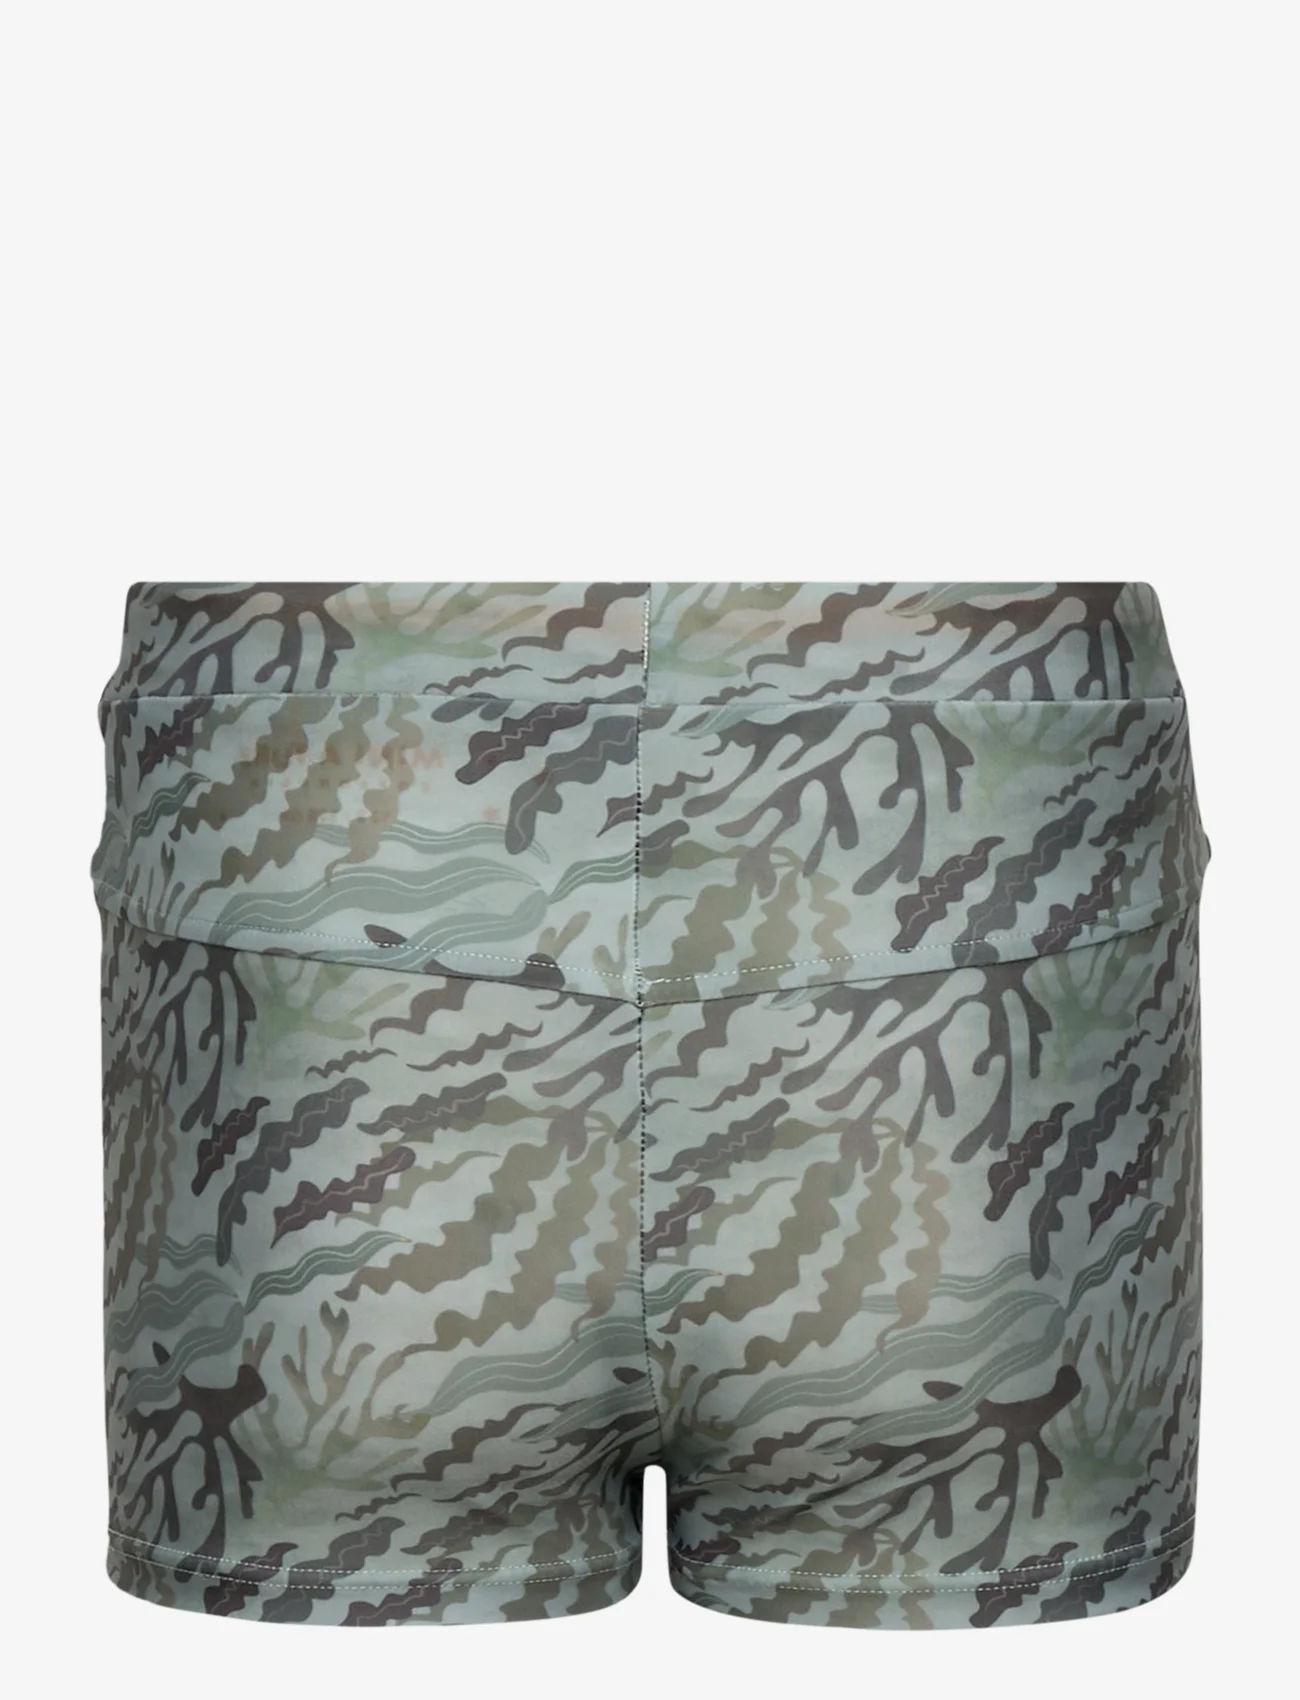 Mini A Ture - Gerryan printed swim shorts - badbyxor - print sea weed camo - 1